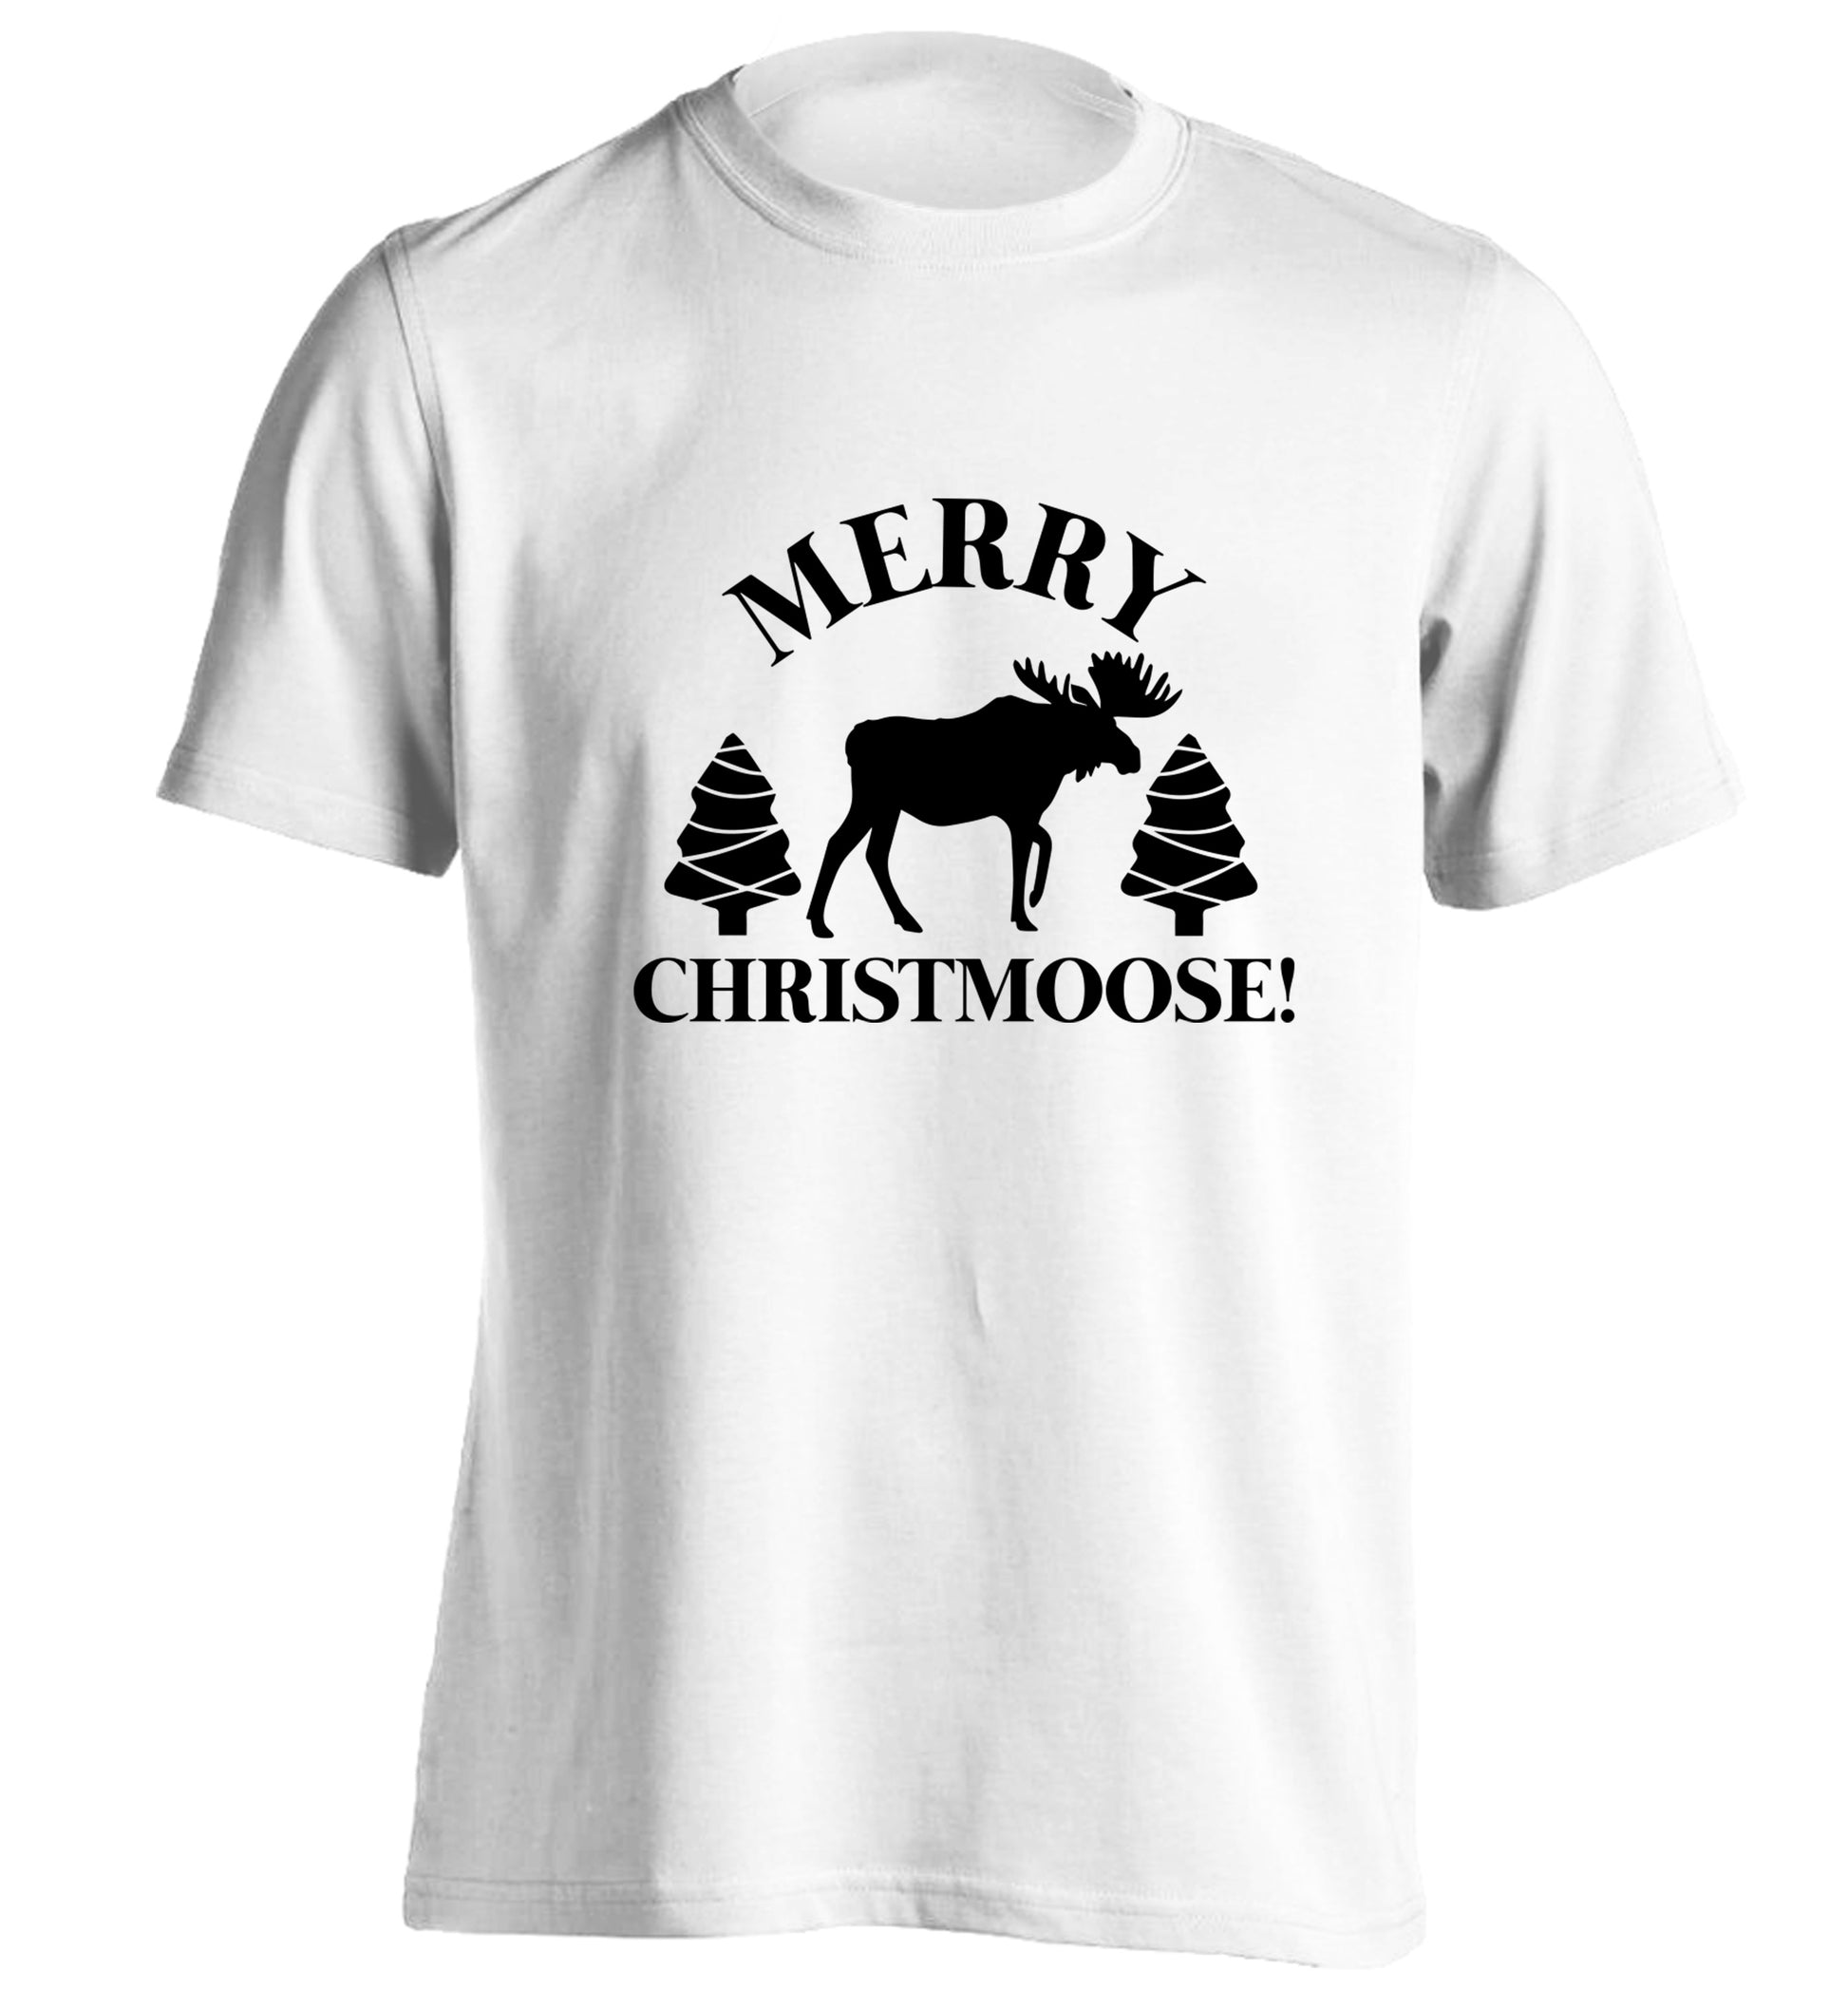 Merry Christmoose adults unisex white Tshirt 2XL